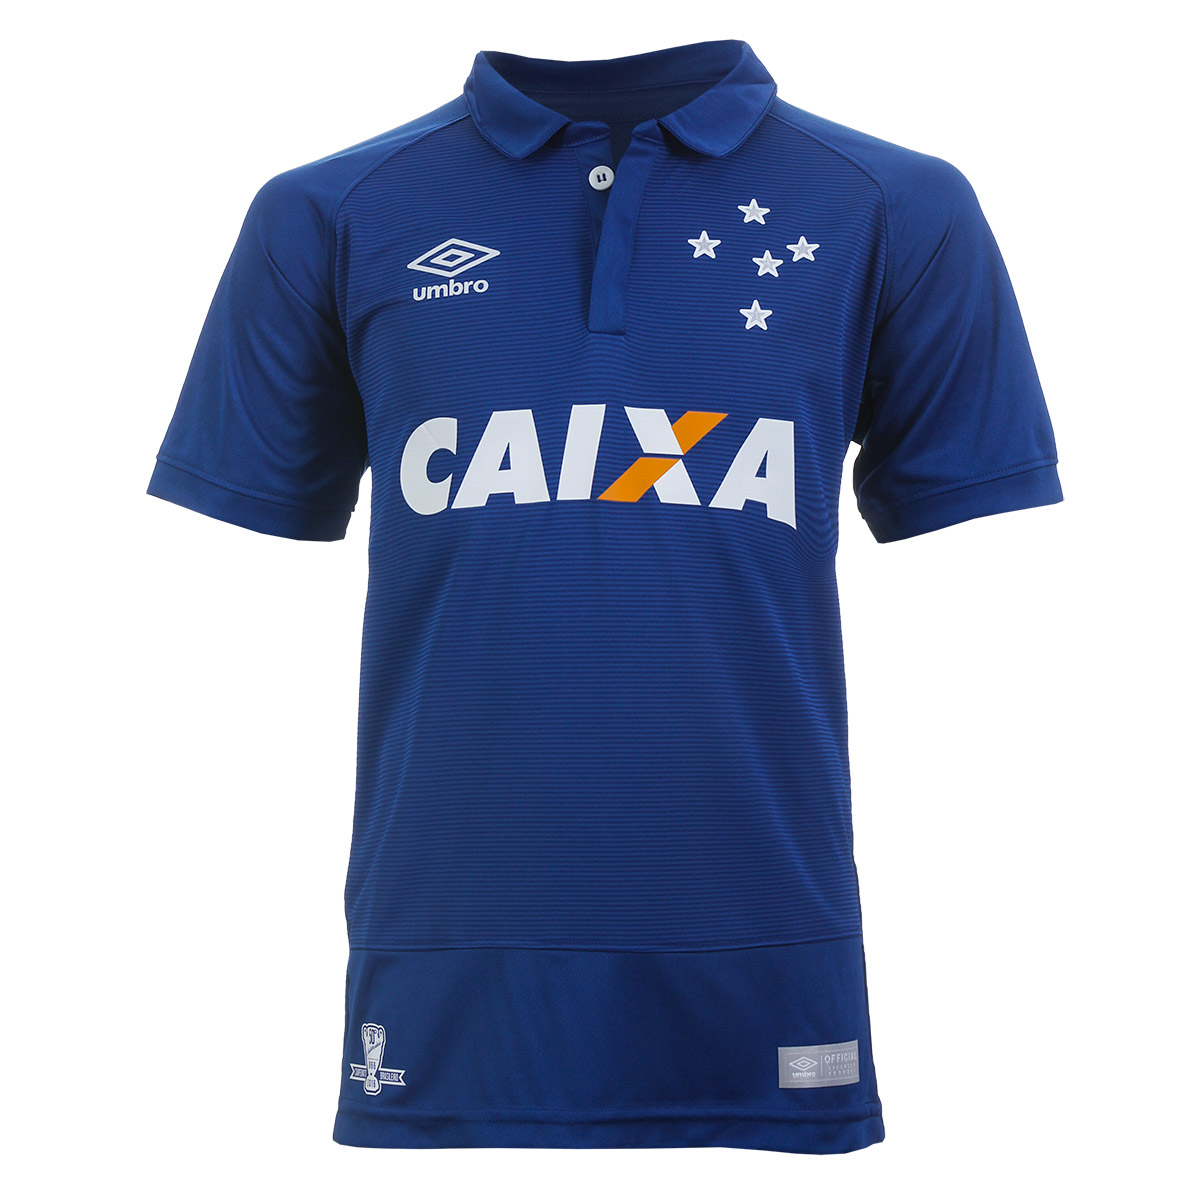 Camiseta Juvenil Umbro Cruzeiro 2016 - Azul/Branco